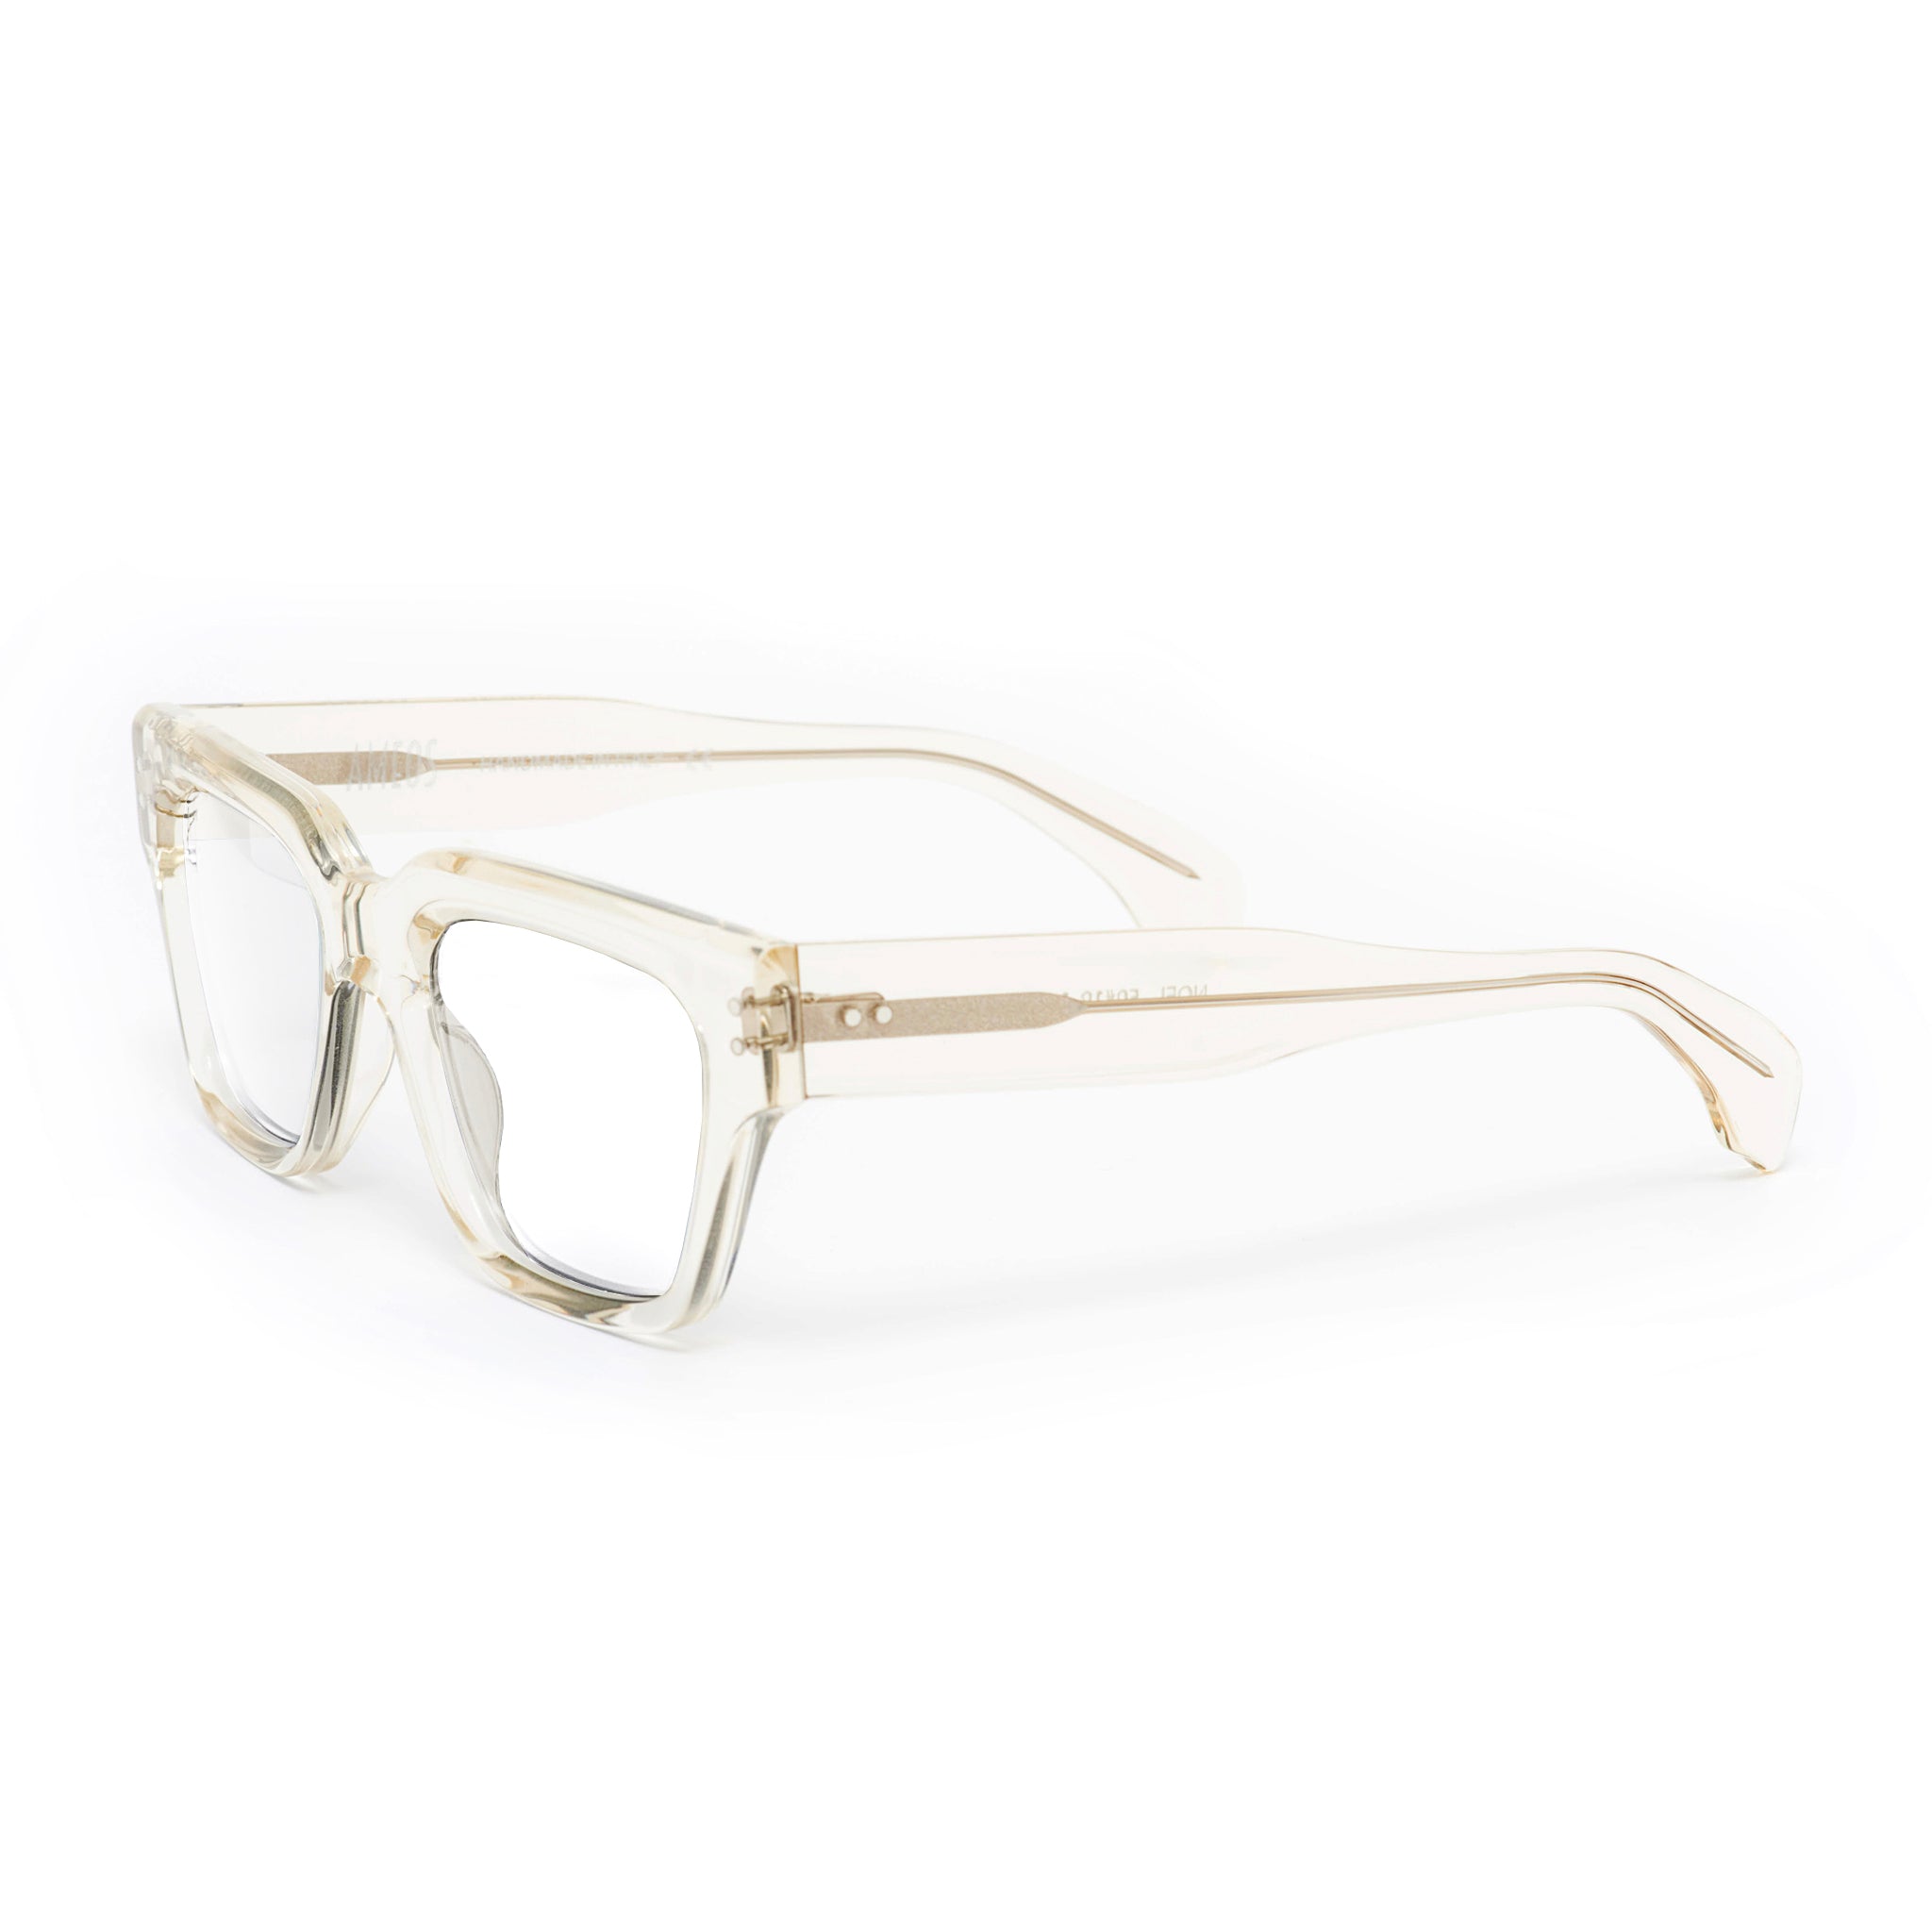 Ameos eyewear noel optical glasses in transparent frames. Unisex and handmade in Italy.